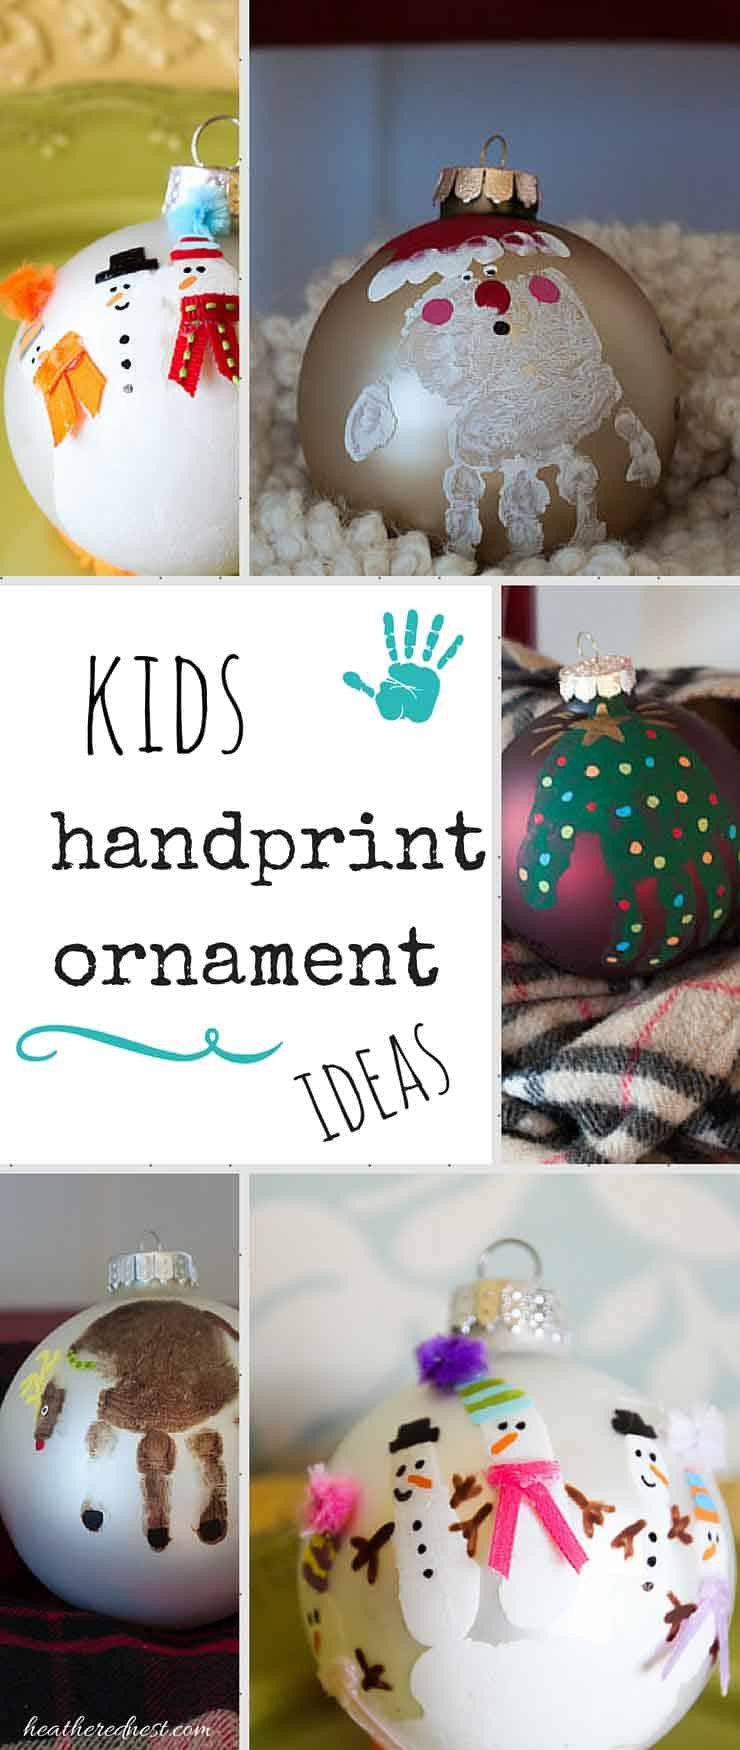 DIY Kids Ornaments
 Handprint Ornament and DIY Christmas Ornament Ideas